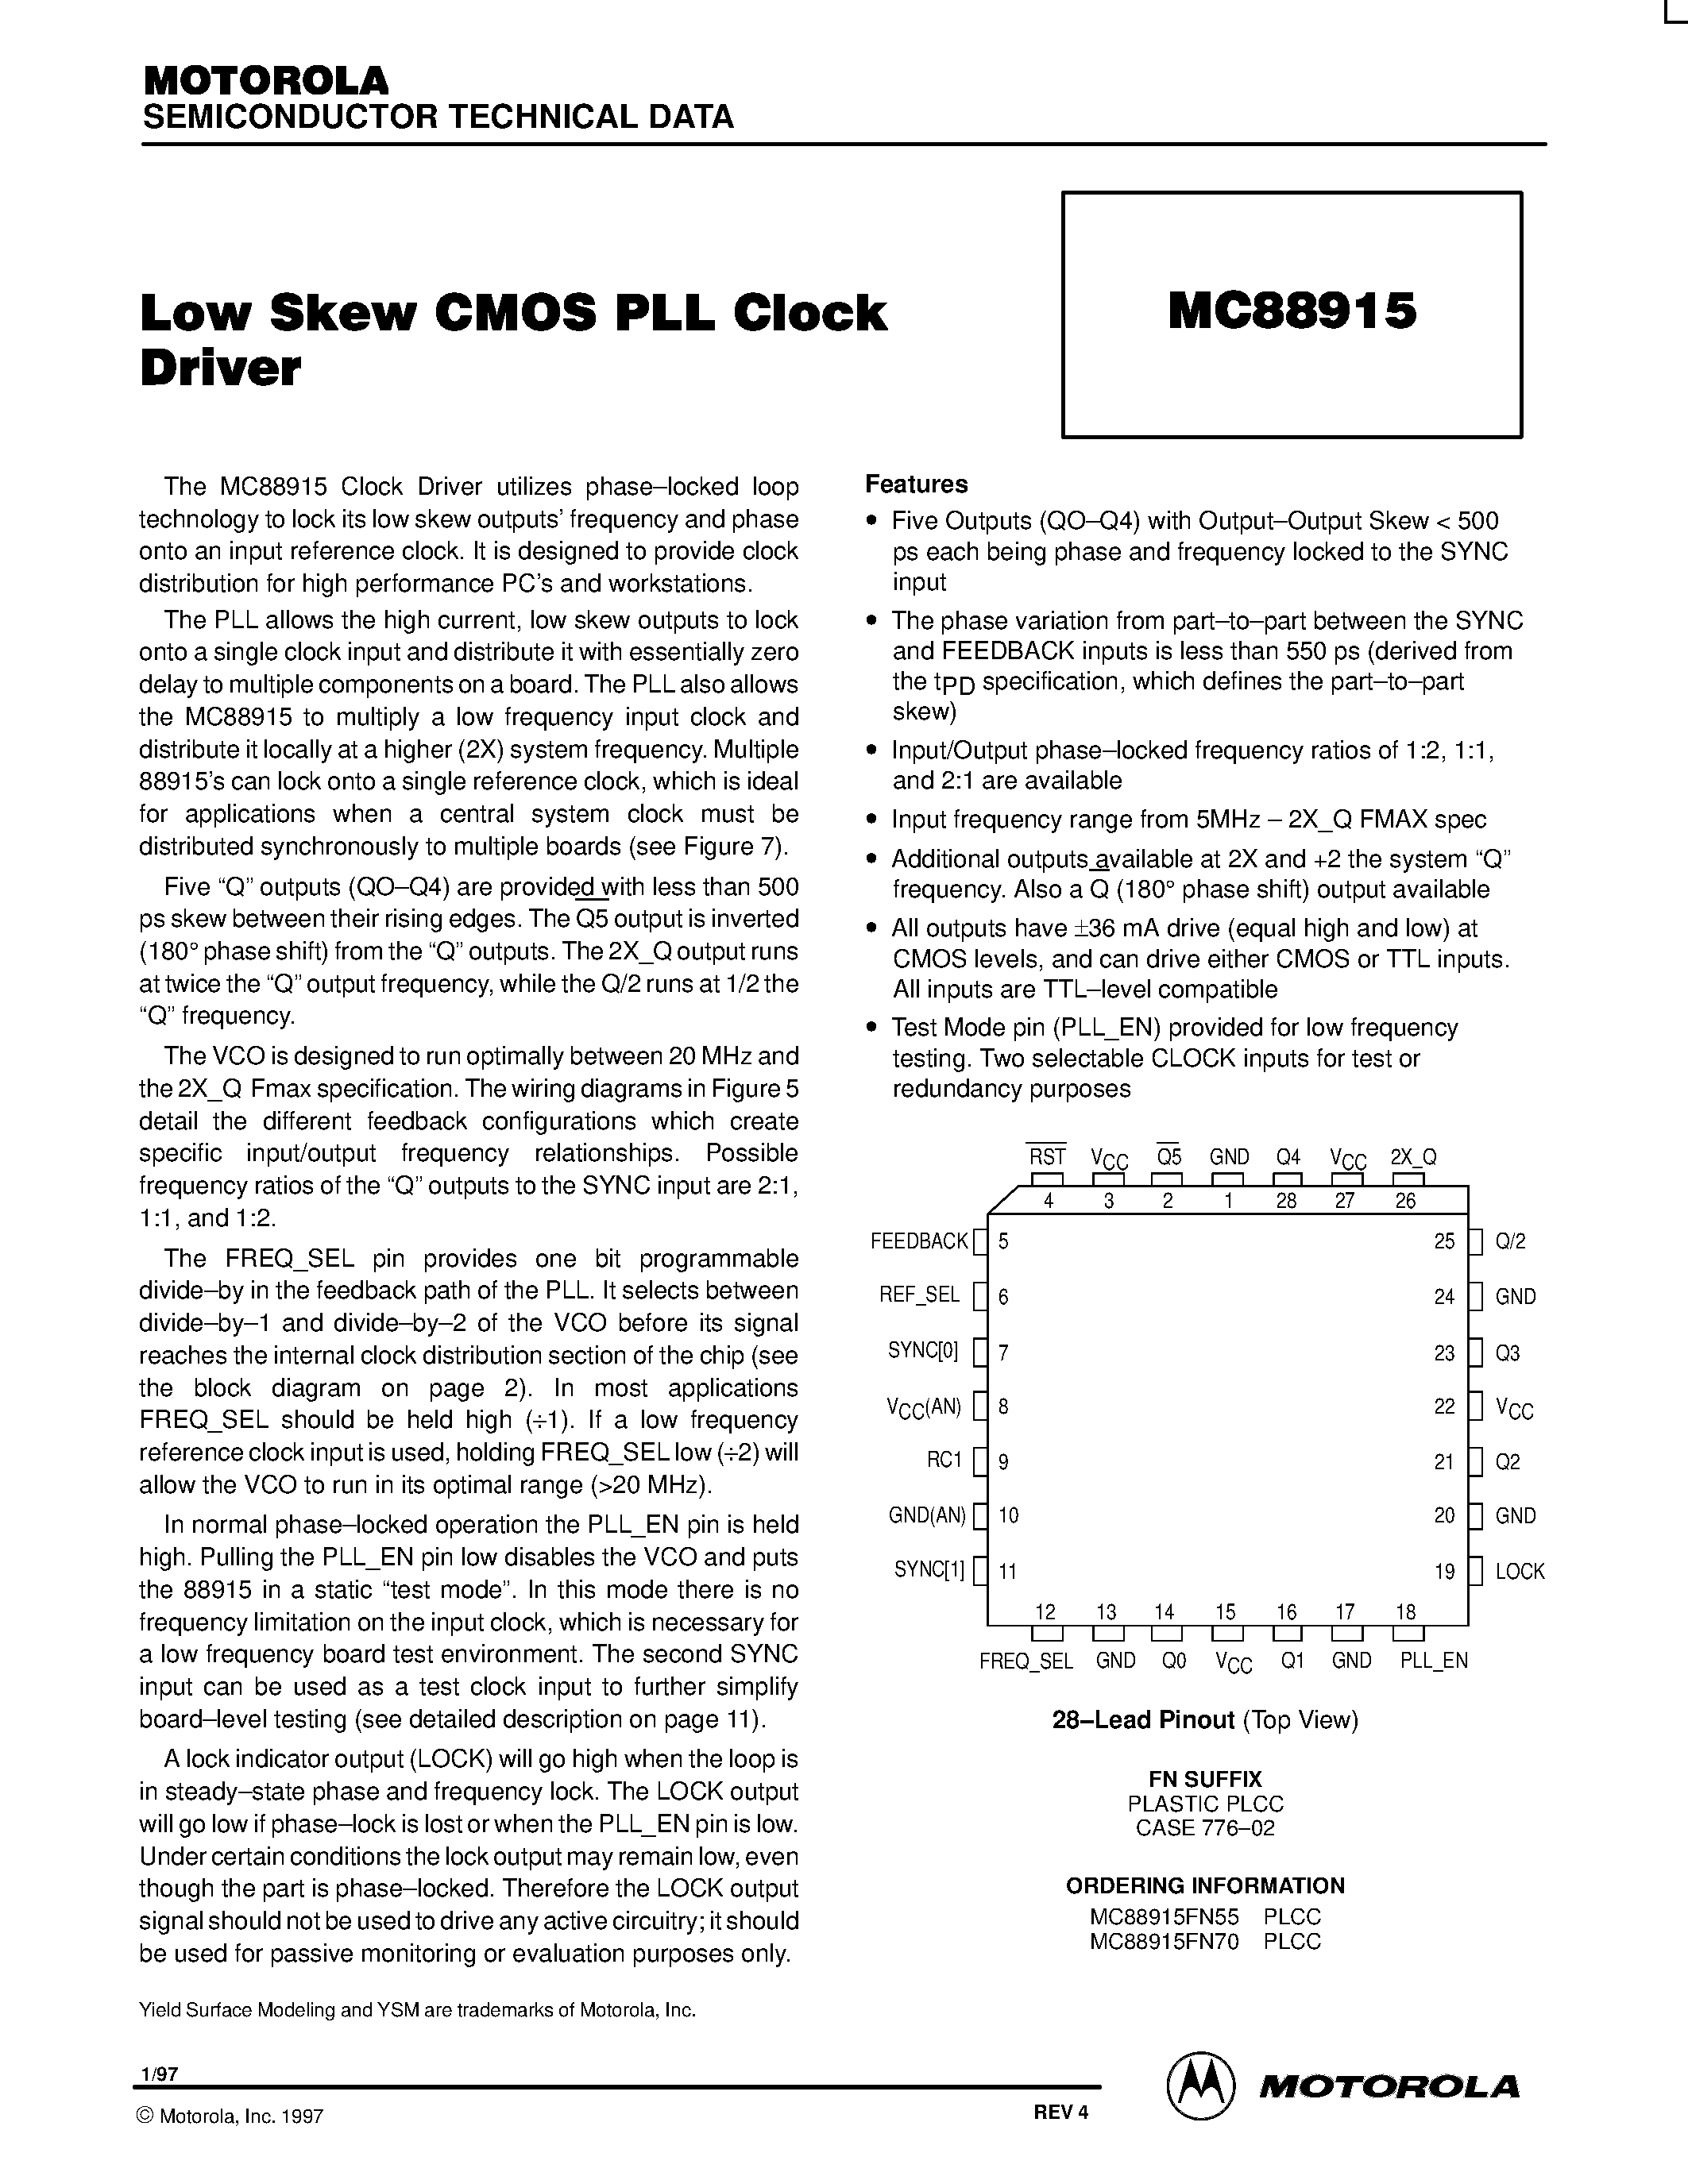 Datasheet MC88915 - LOW SKEW CMOS PLL CLOCK DRIVER page 1